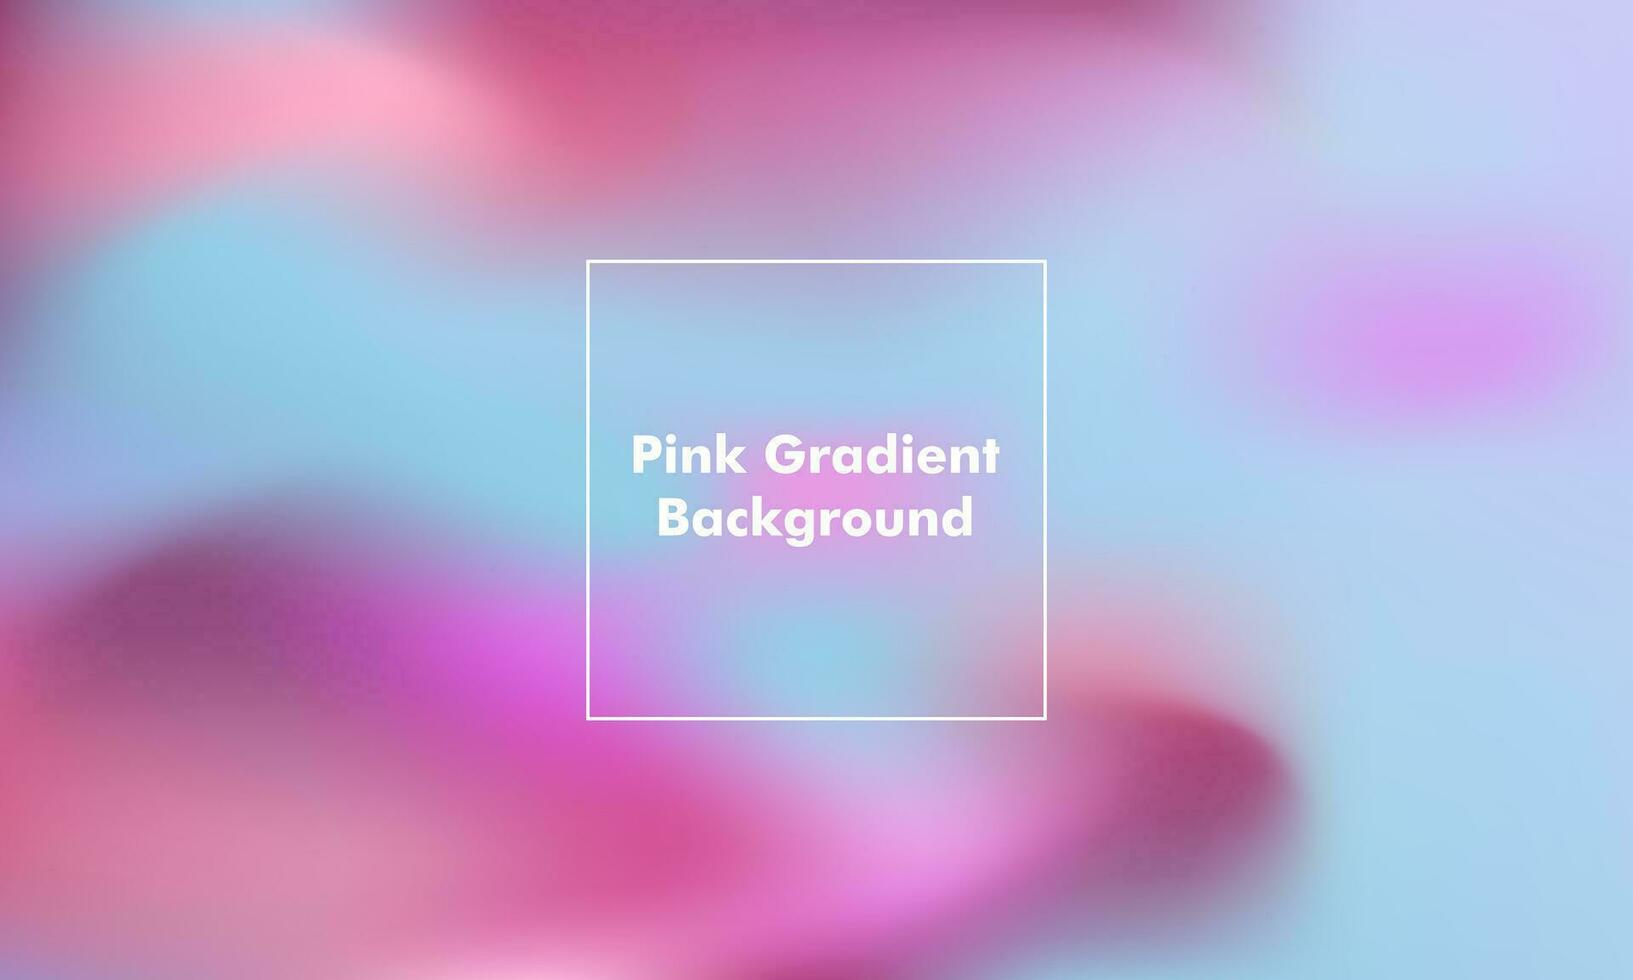 abstract gradient pastel background fluid blur good for wallpaper, website, background, social media vector